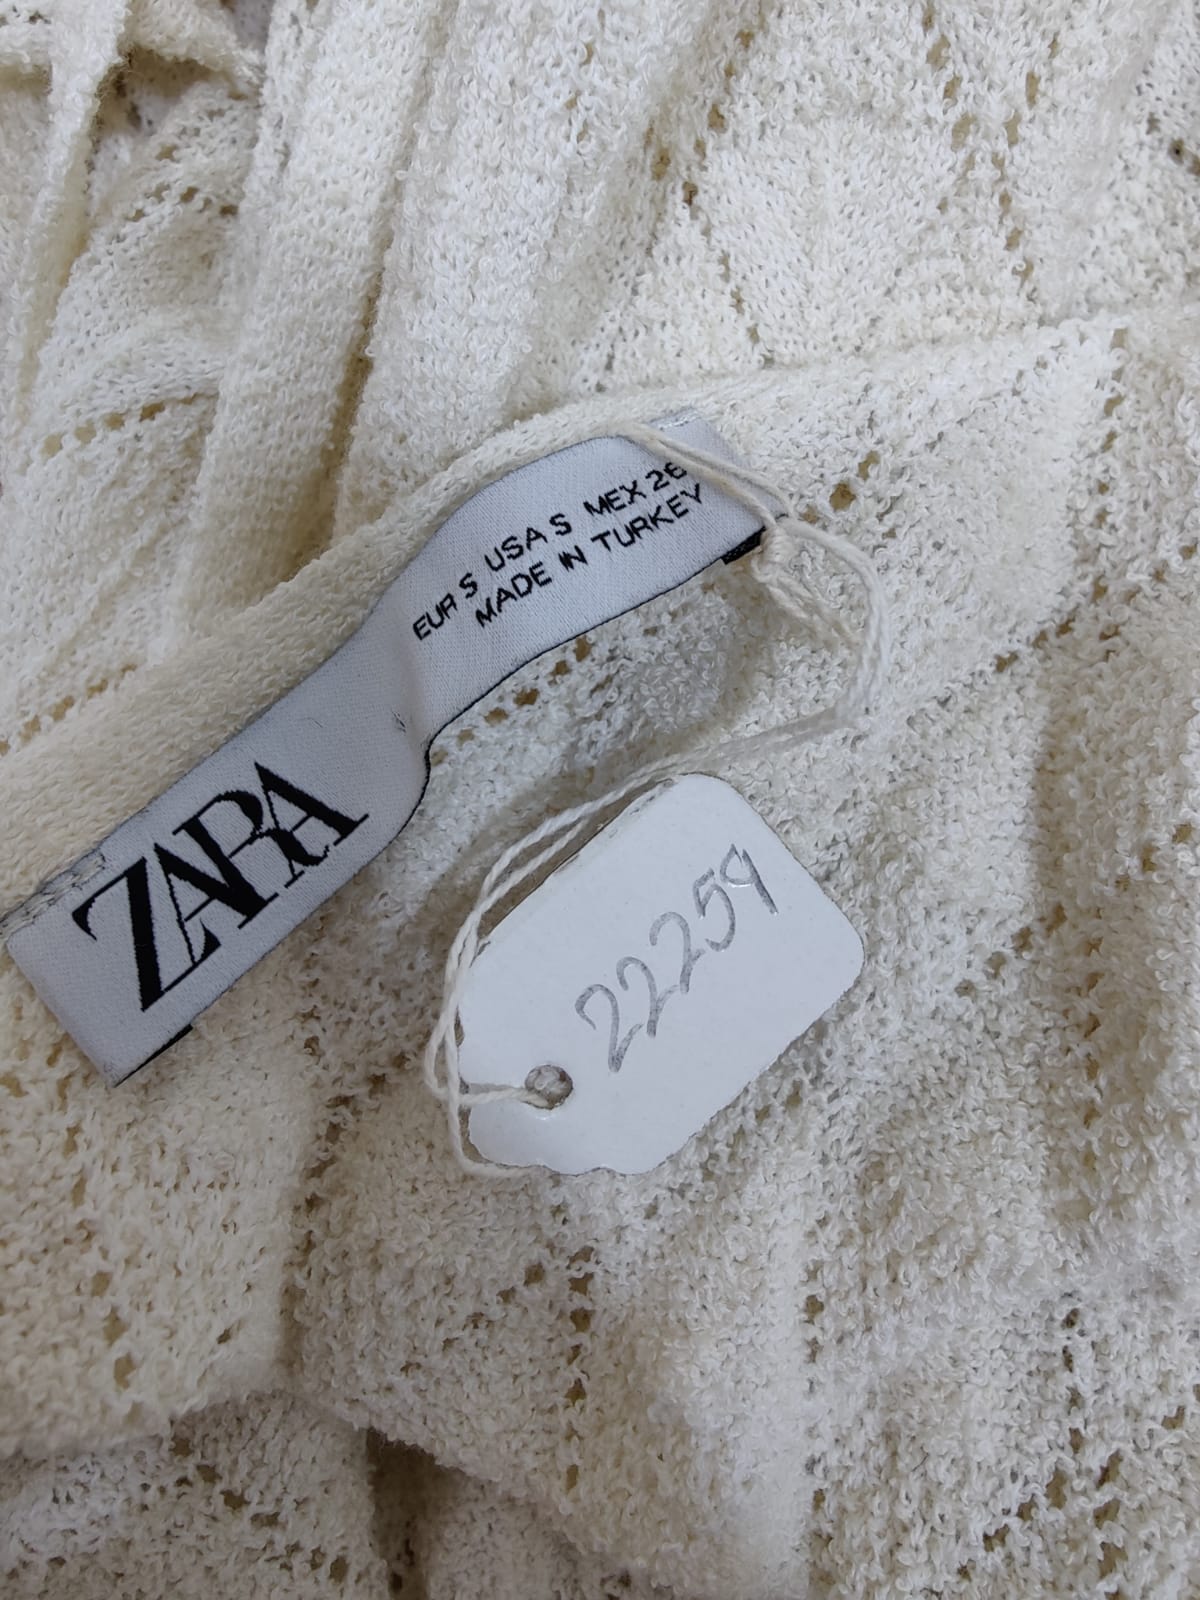 ZARA White Crochet Tie Up Dress | Relove